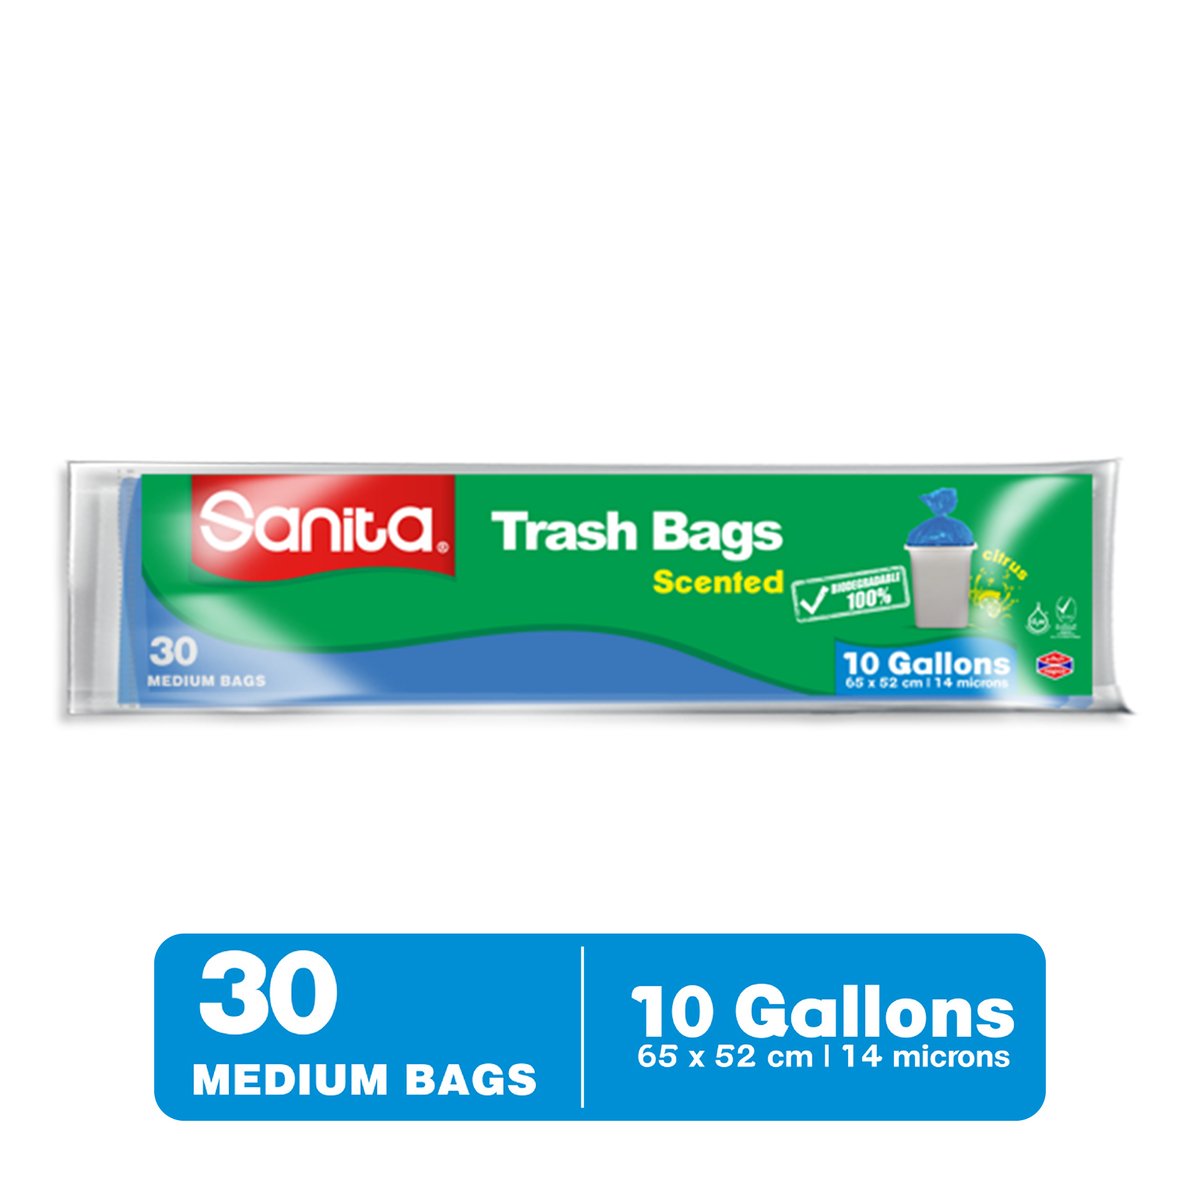 Sanita Club Trash Bags Bio Degradable 5 Gallons 130 Bags